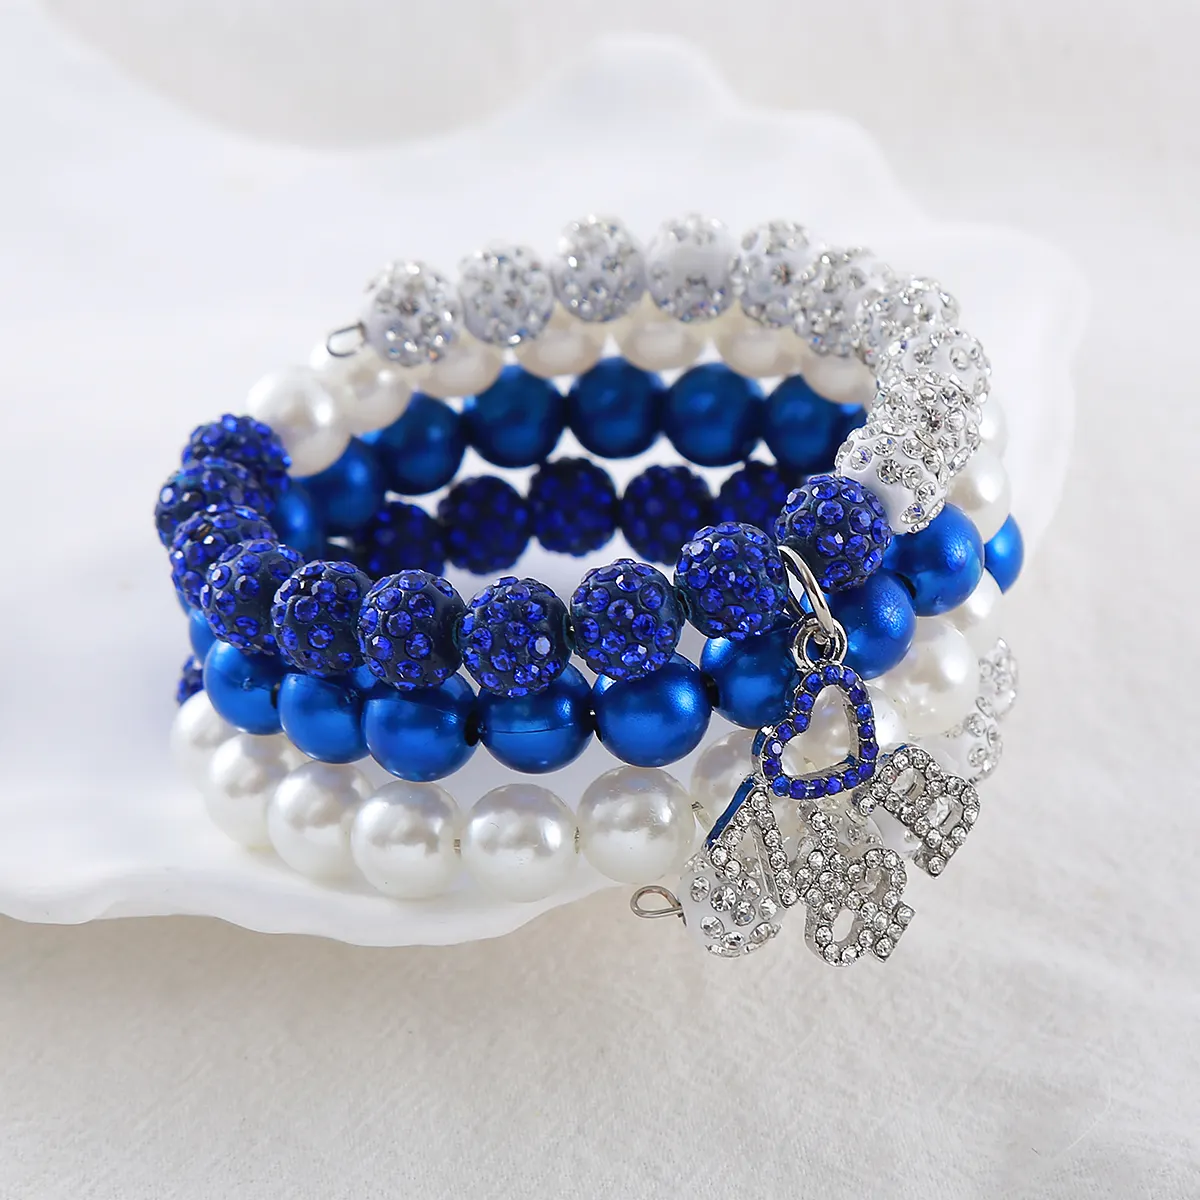 Quality Assured Statement Greek ZPB Symbol Jewelry Layered Blue And White Beads Making Zeta Phi Beta Stackable Bracelet